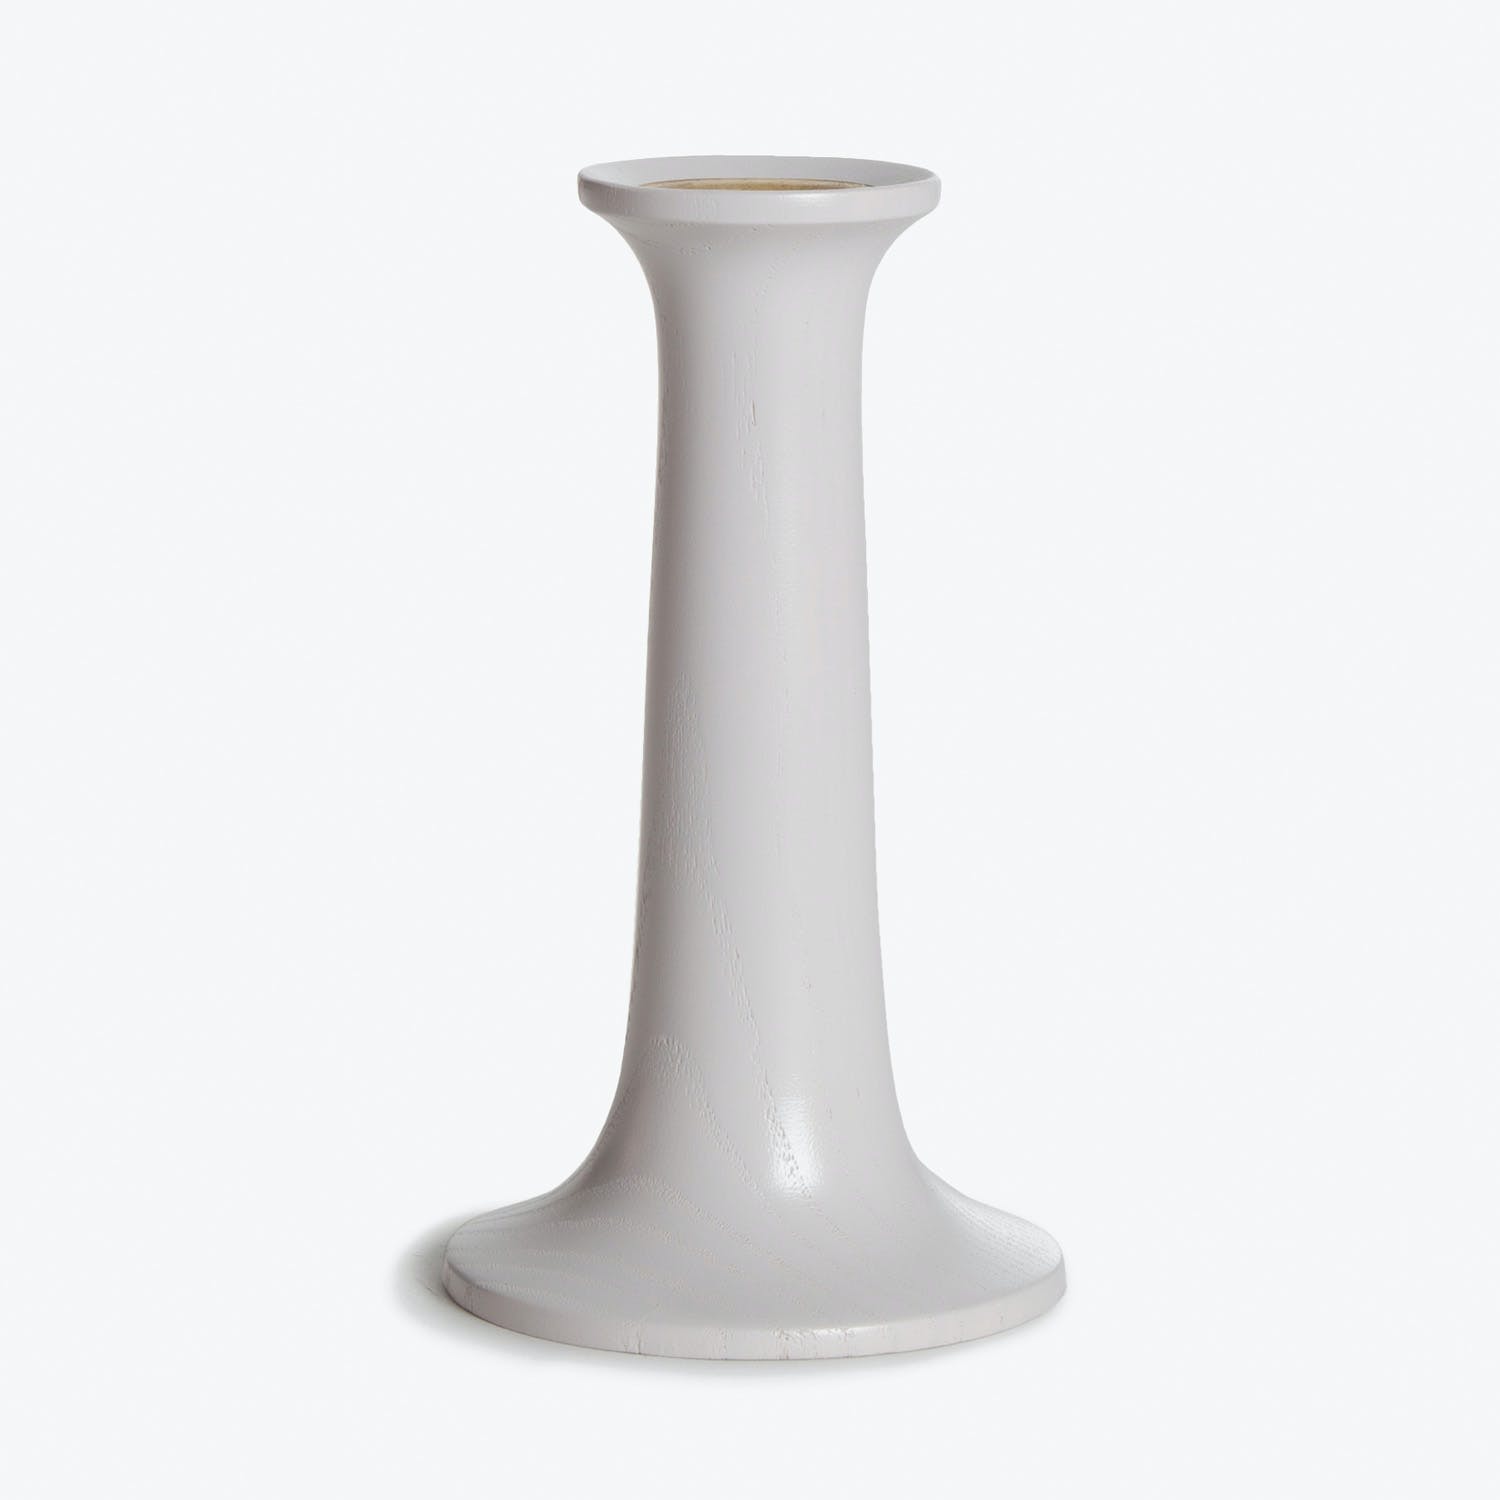 Minimalist white vase with sleek design, perfect for modern decor.